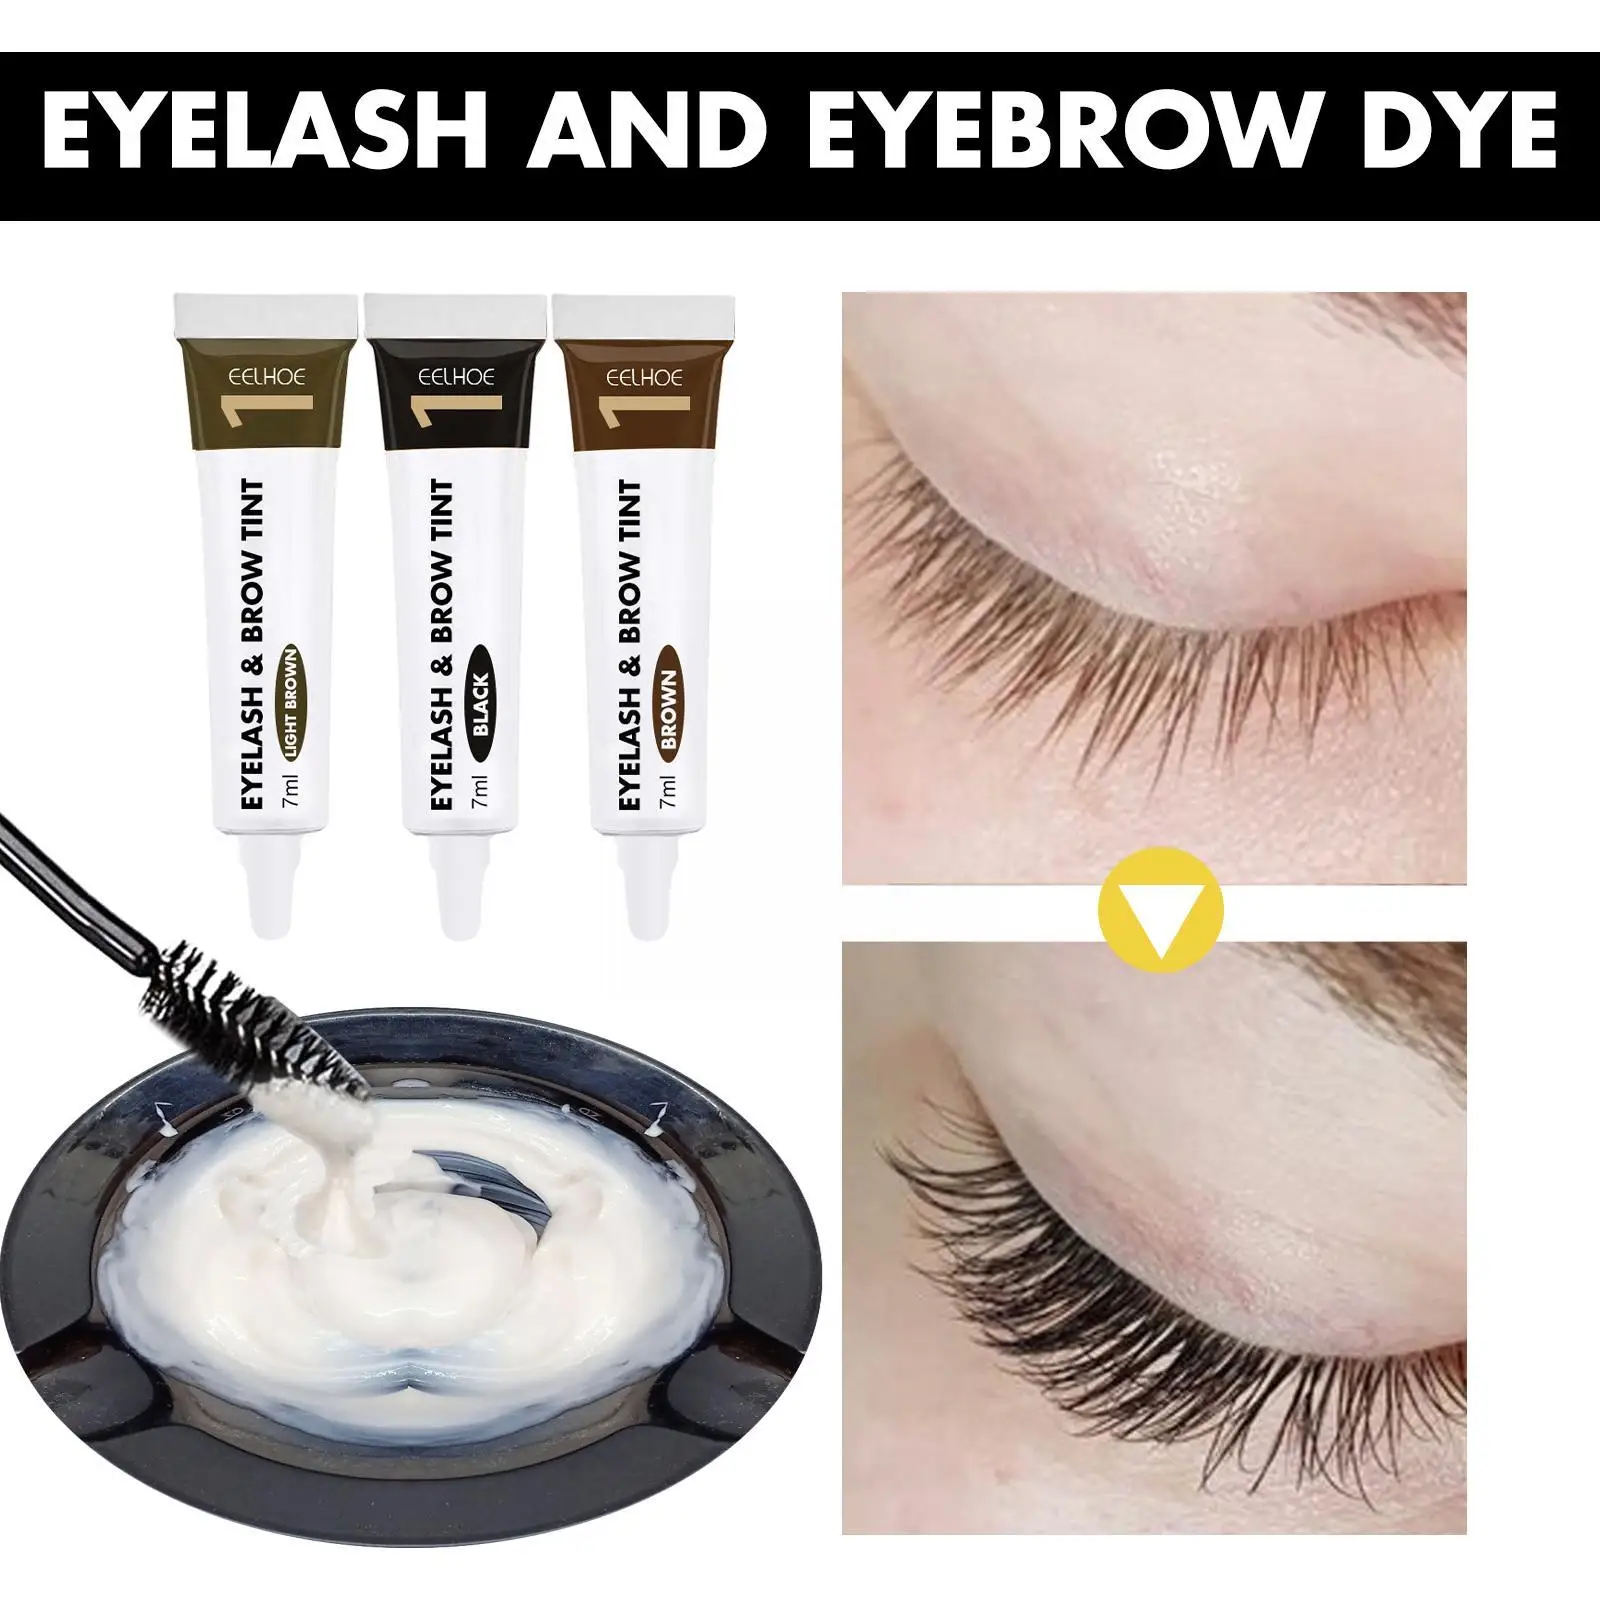 Eyelash Eyebrow Dye Tint Kit Professional Lash Dyeing Make Eye Makeup Lifting Charming Brow Up Set Eyebrow Setting images - 6